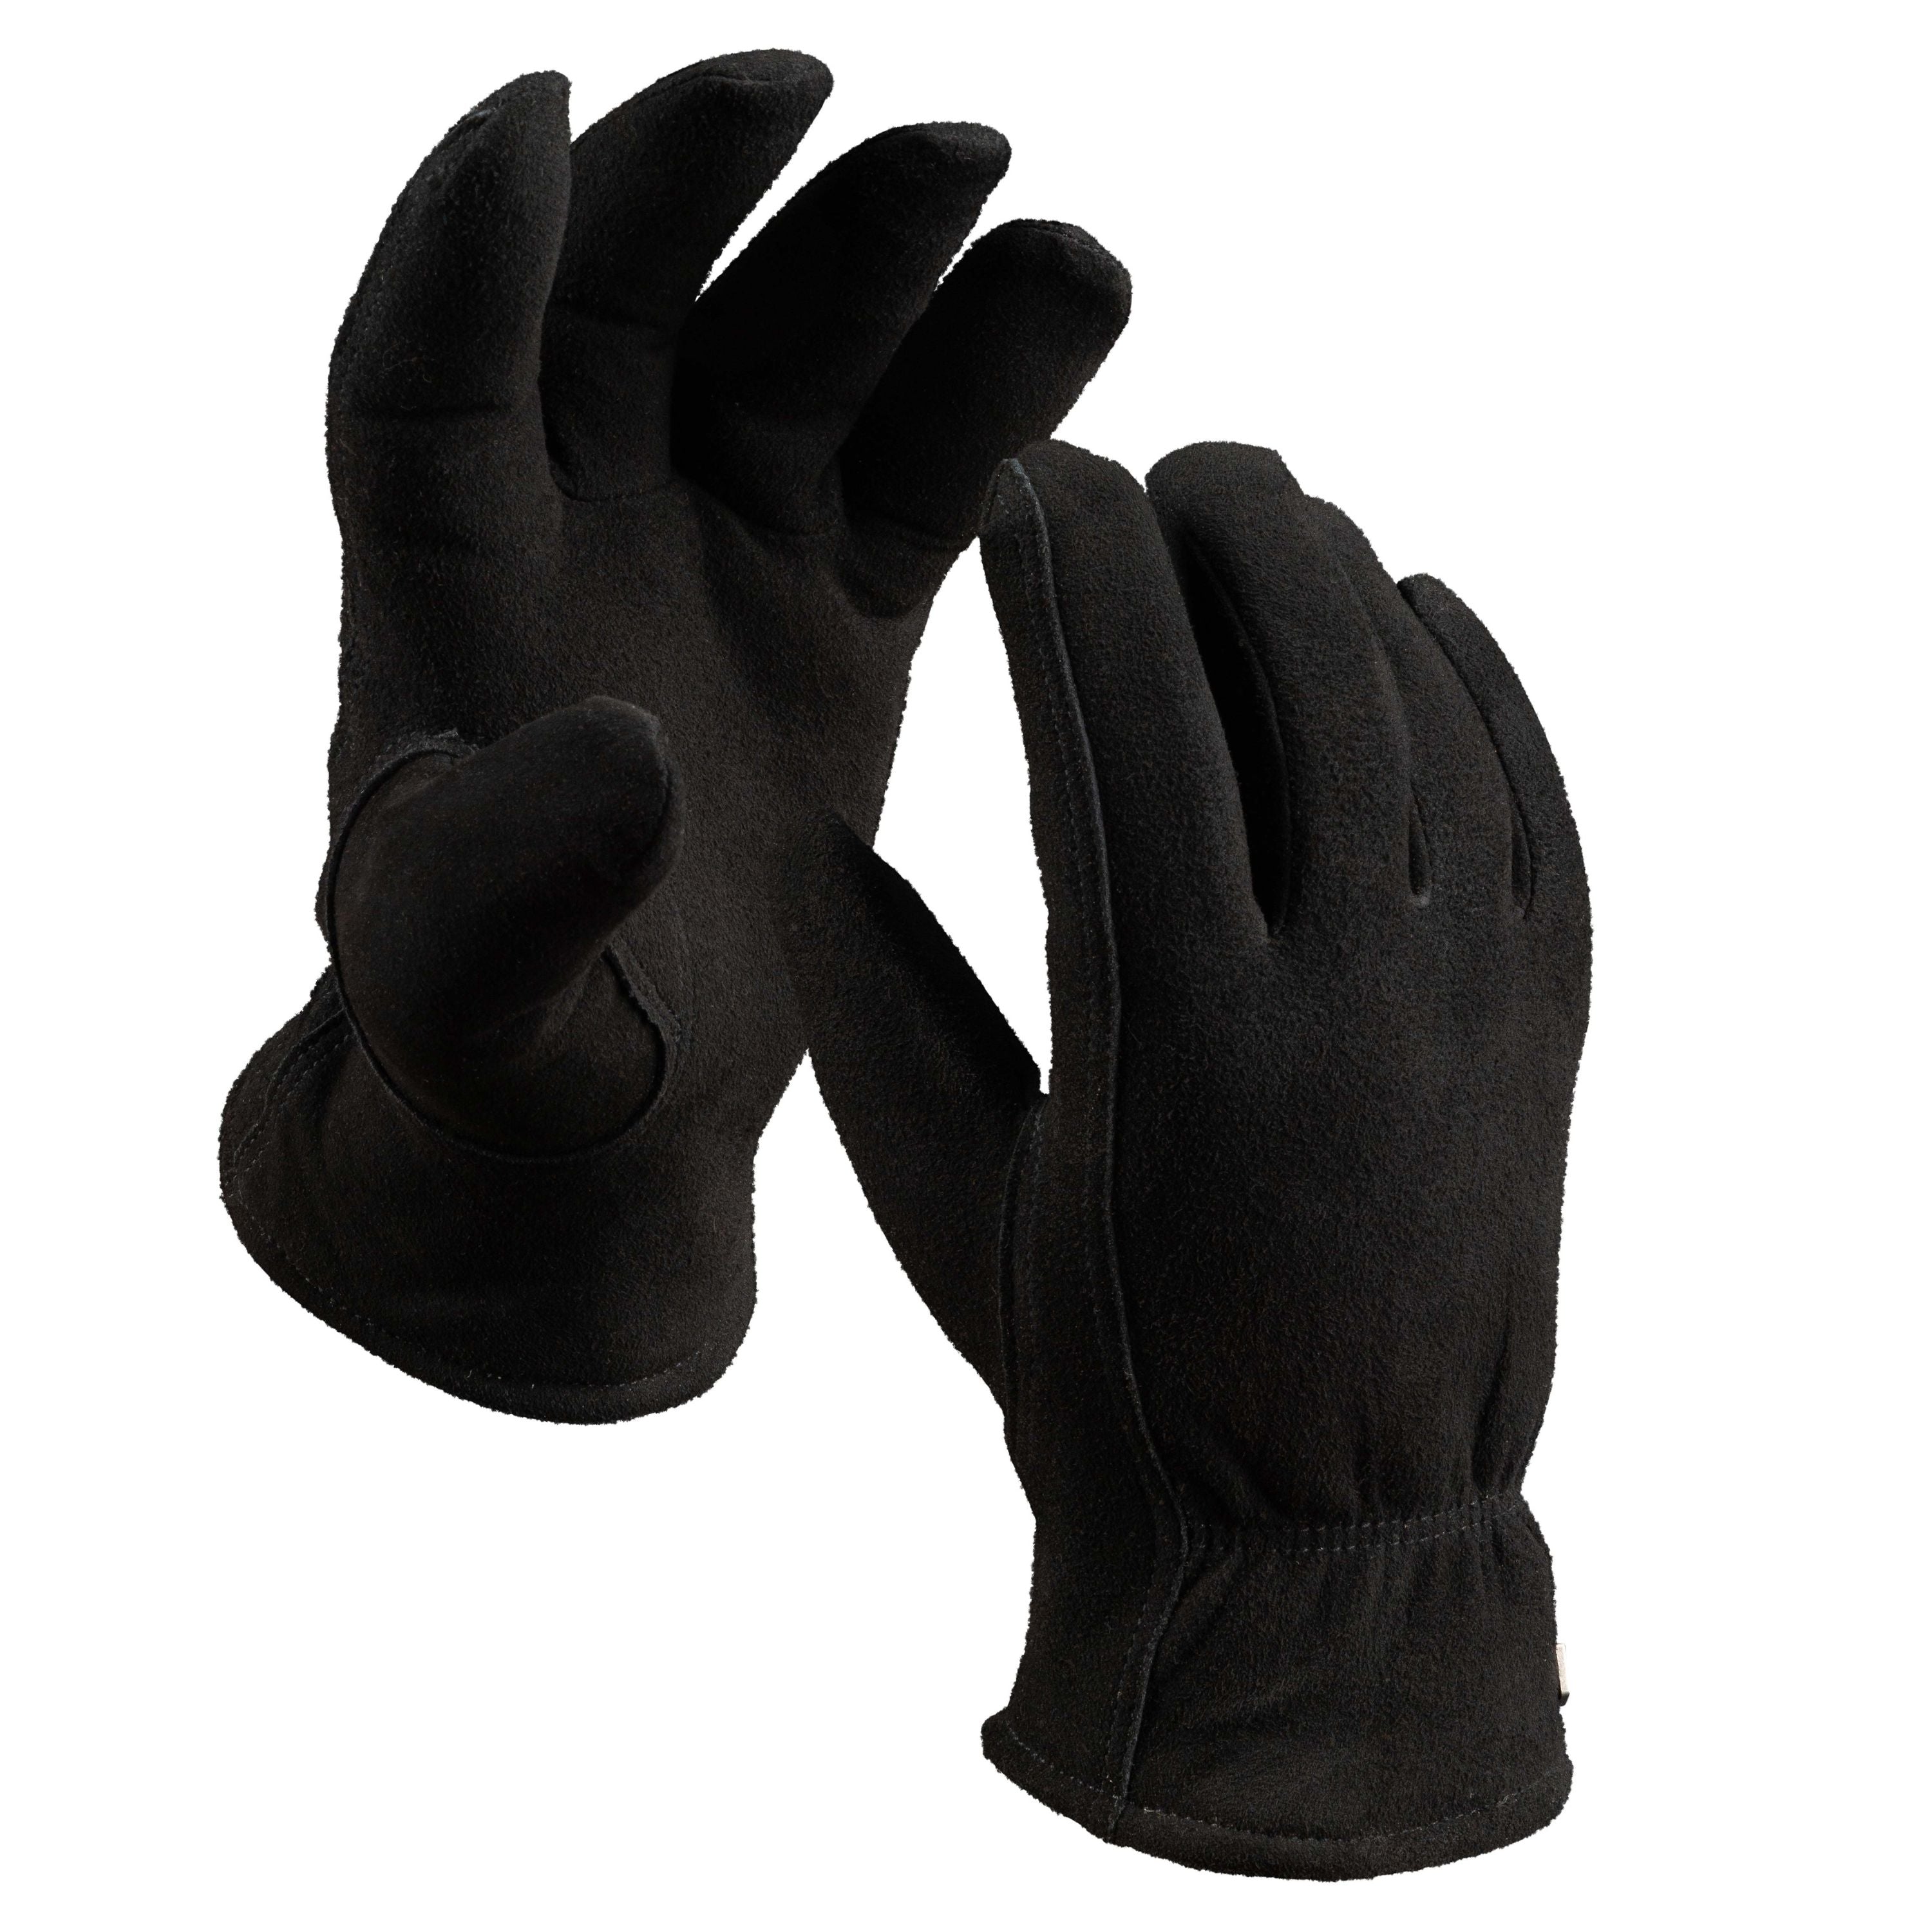 "Chamonix" Leather city gloves - Men’s